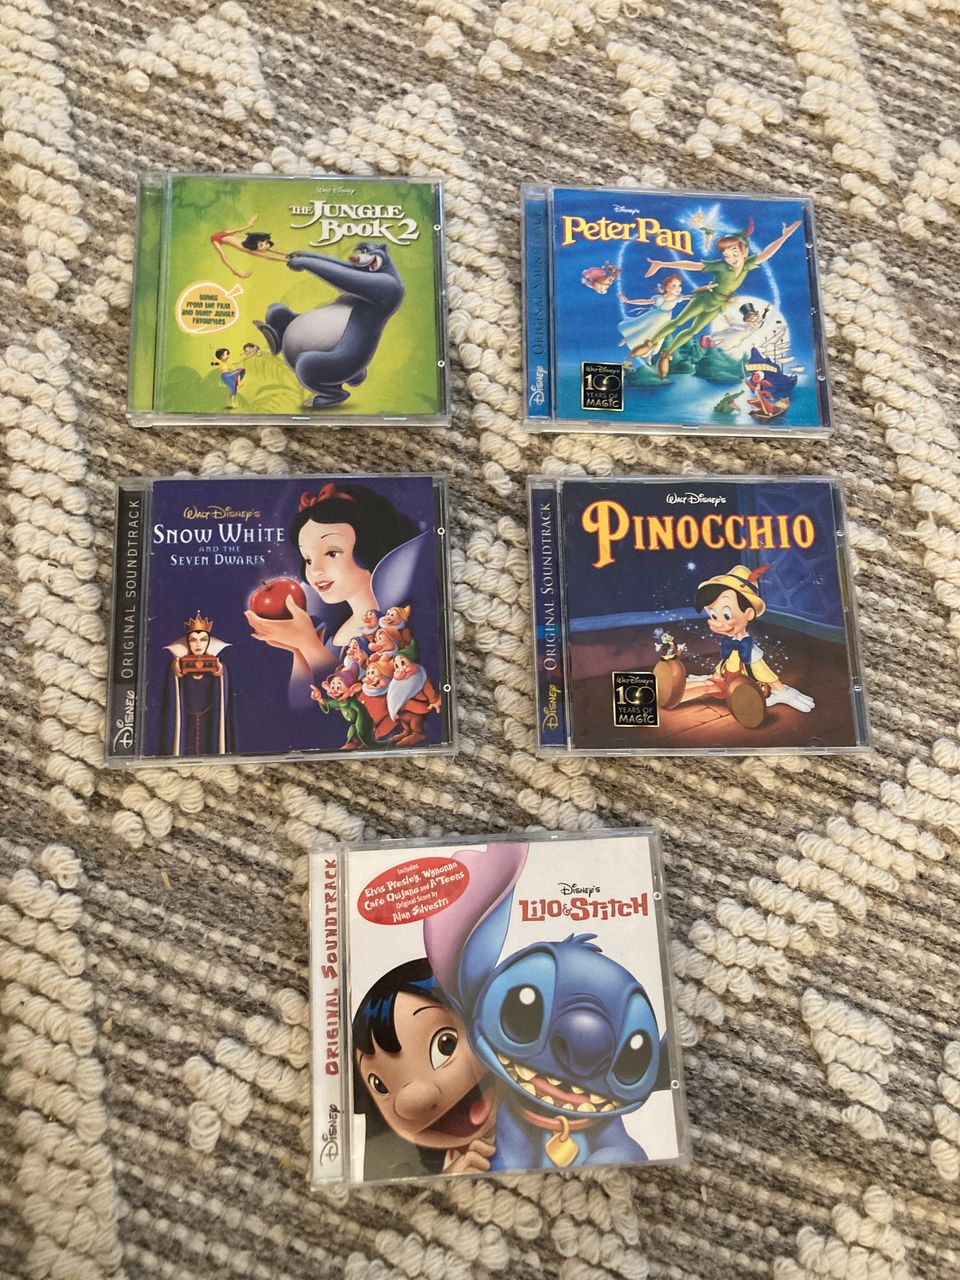 Disneyn soundtrack cd x 5